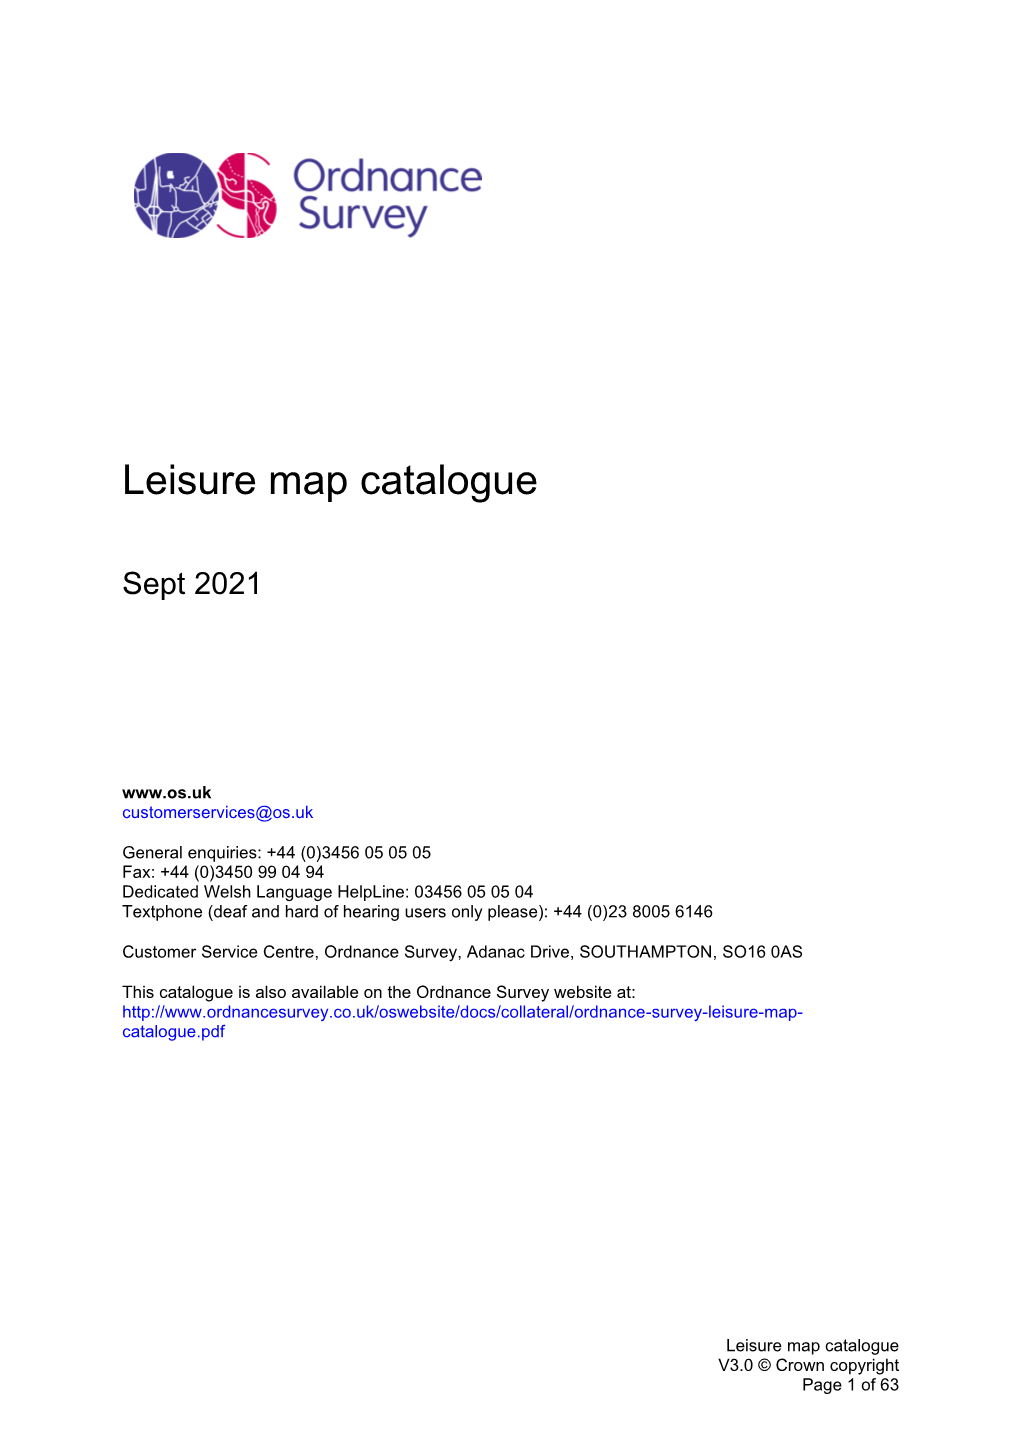 Leisure Map Catalogue